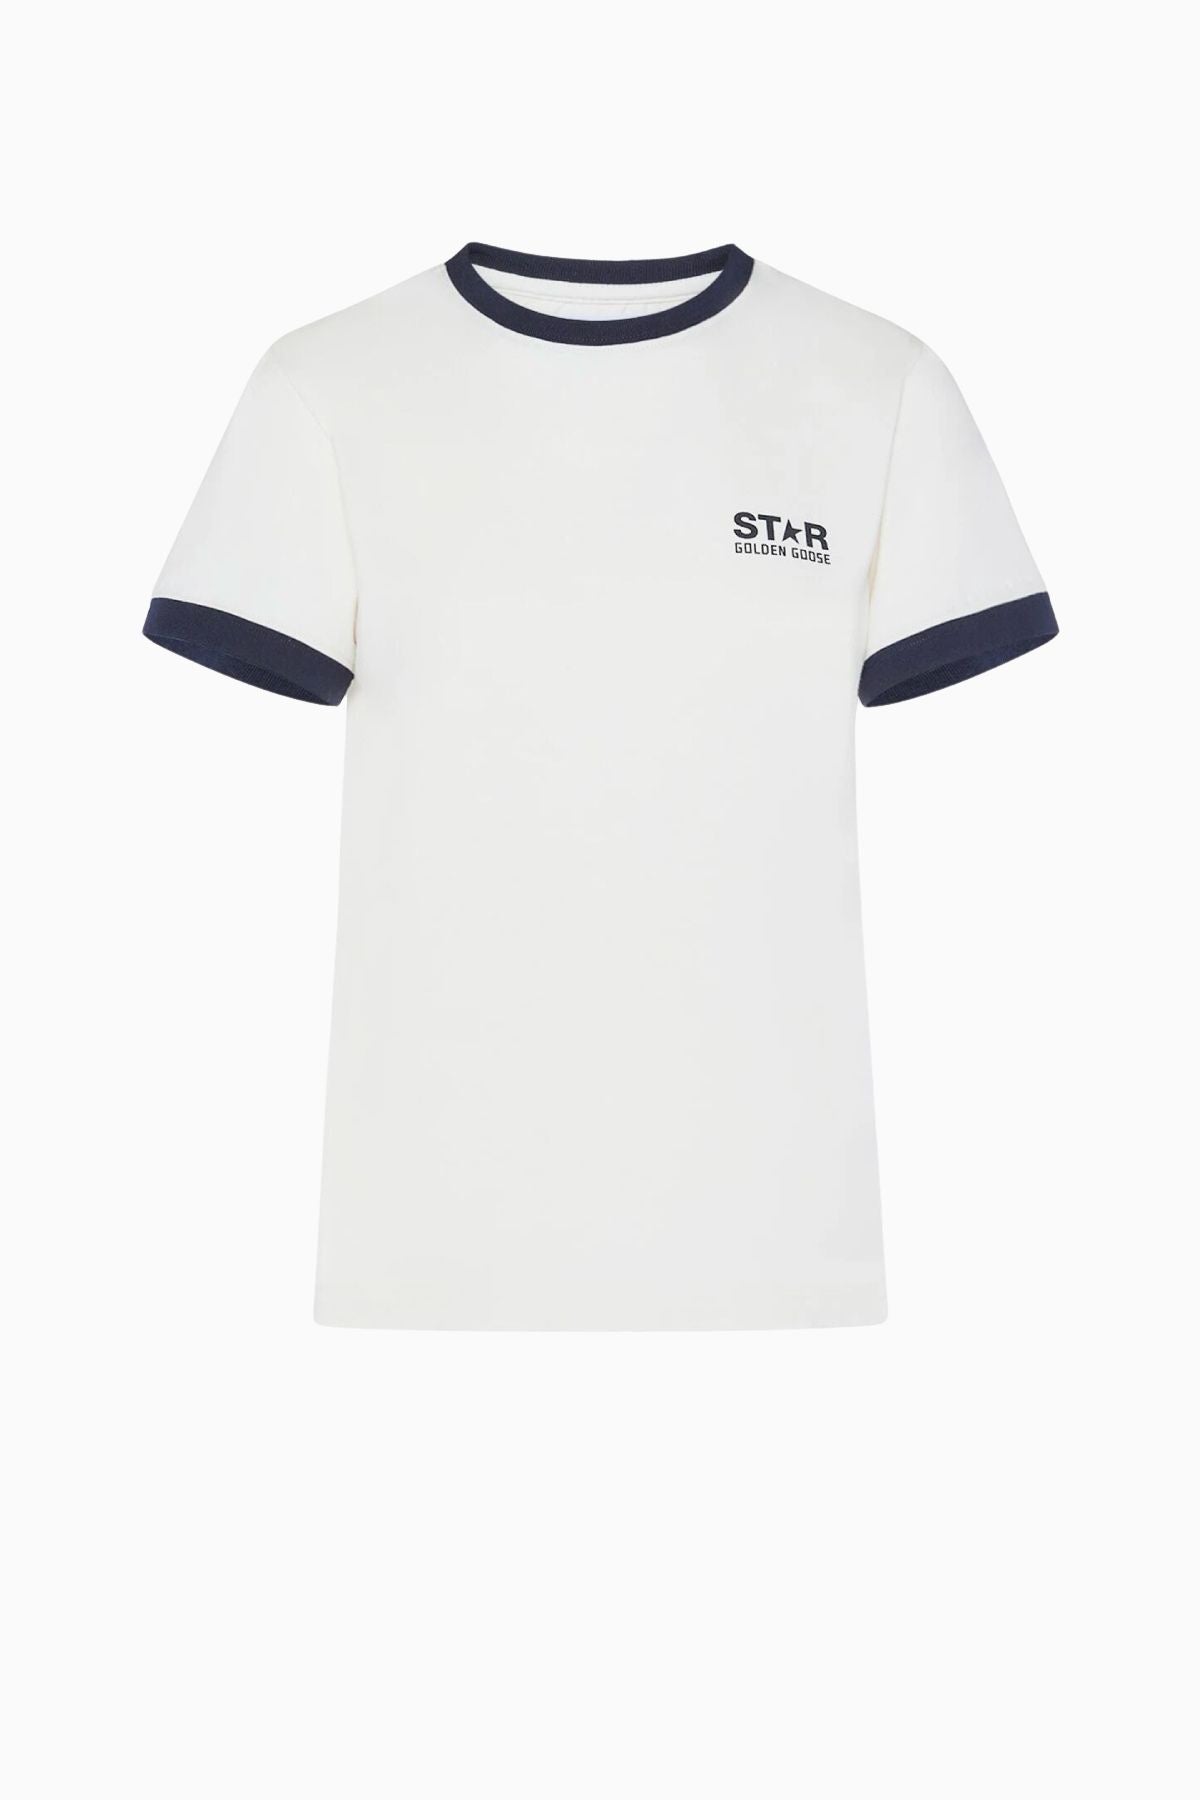 Golden Goose Logo Star T-Shirt - Heritage White/ Dark Blue